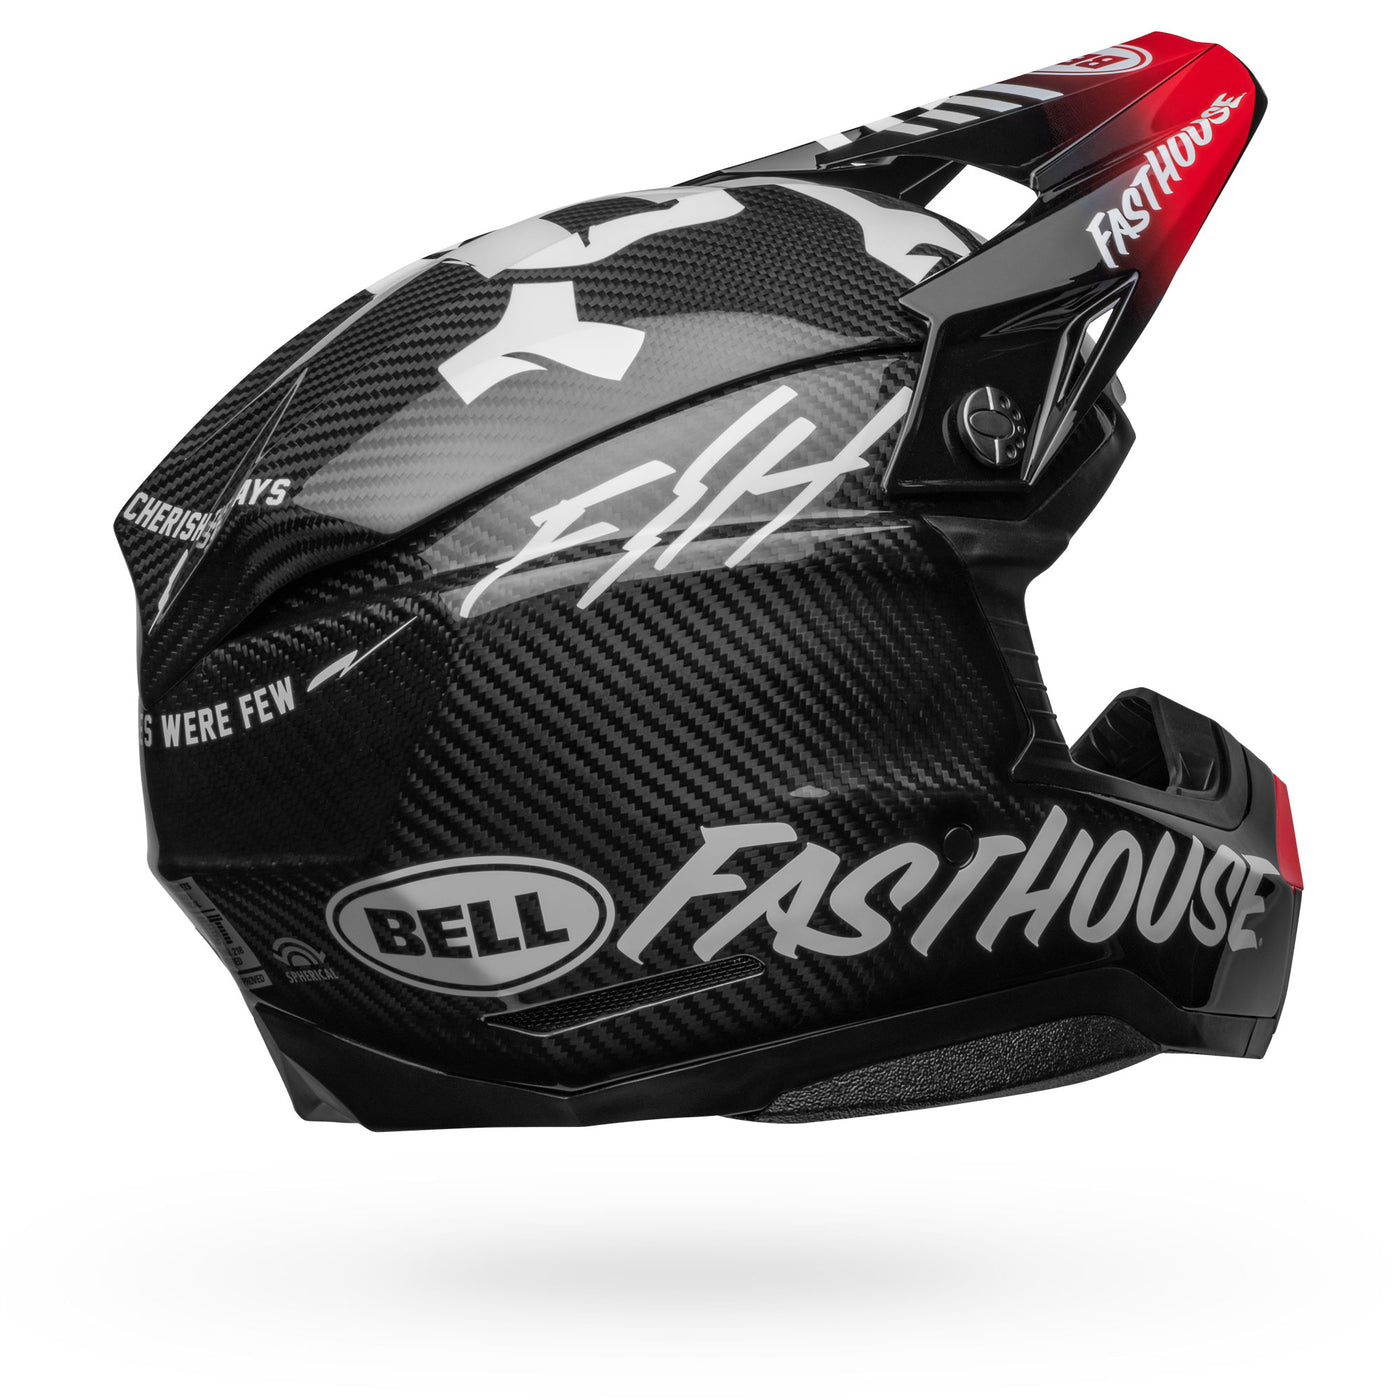 bell moto 10 spherical dirt motorcycle helmet fasthouse privateer gloss black red back right